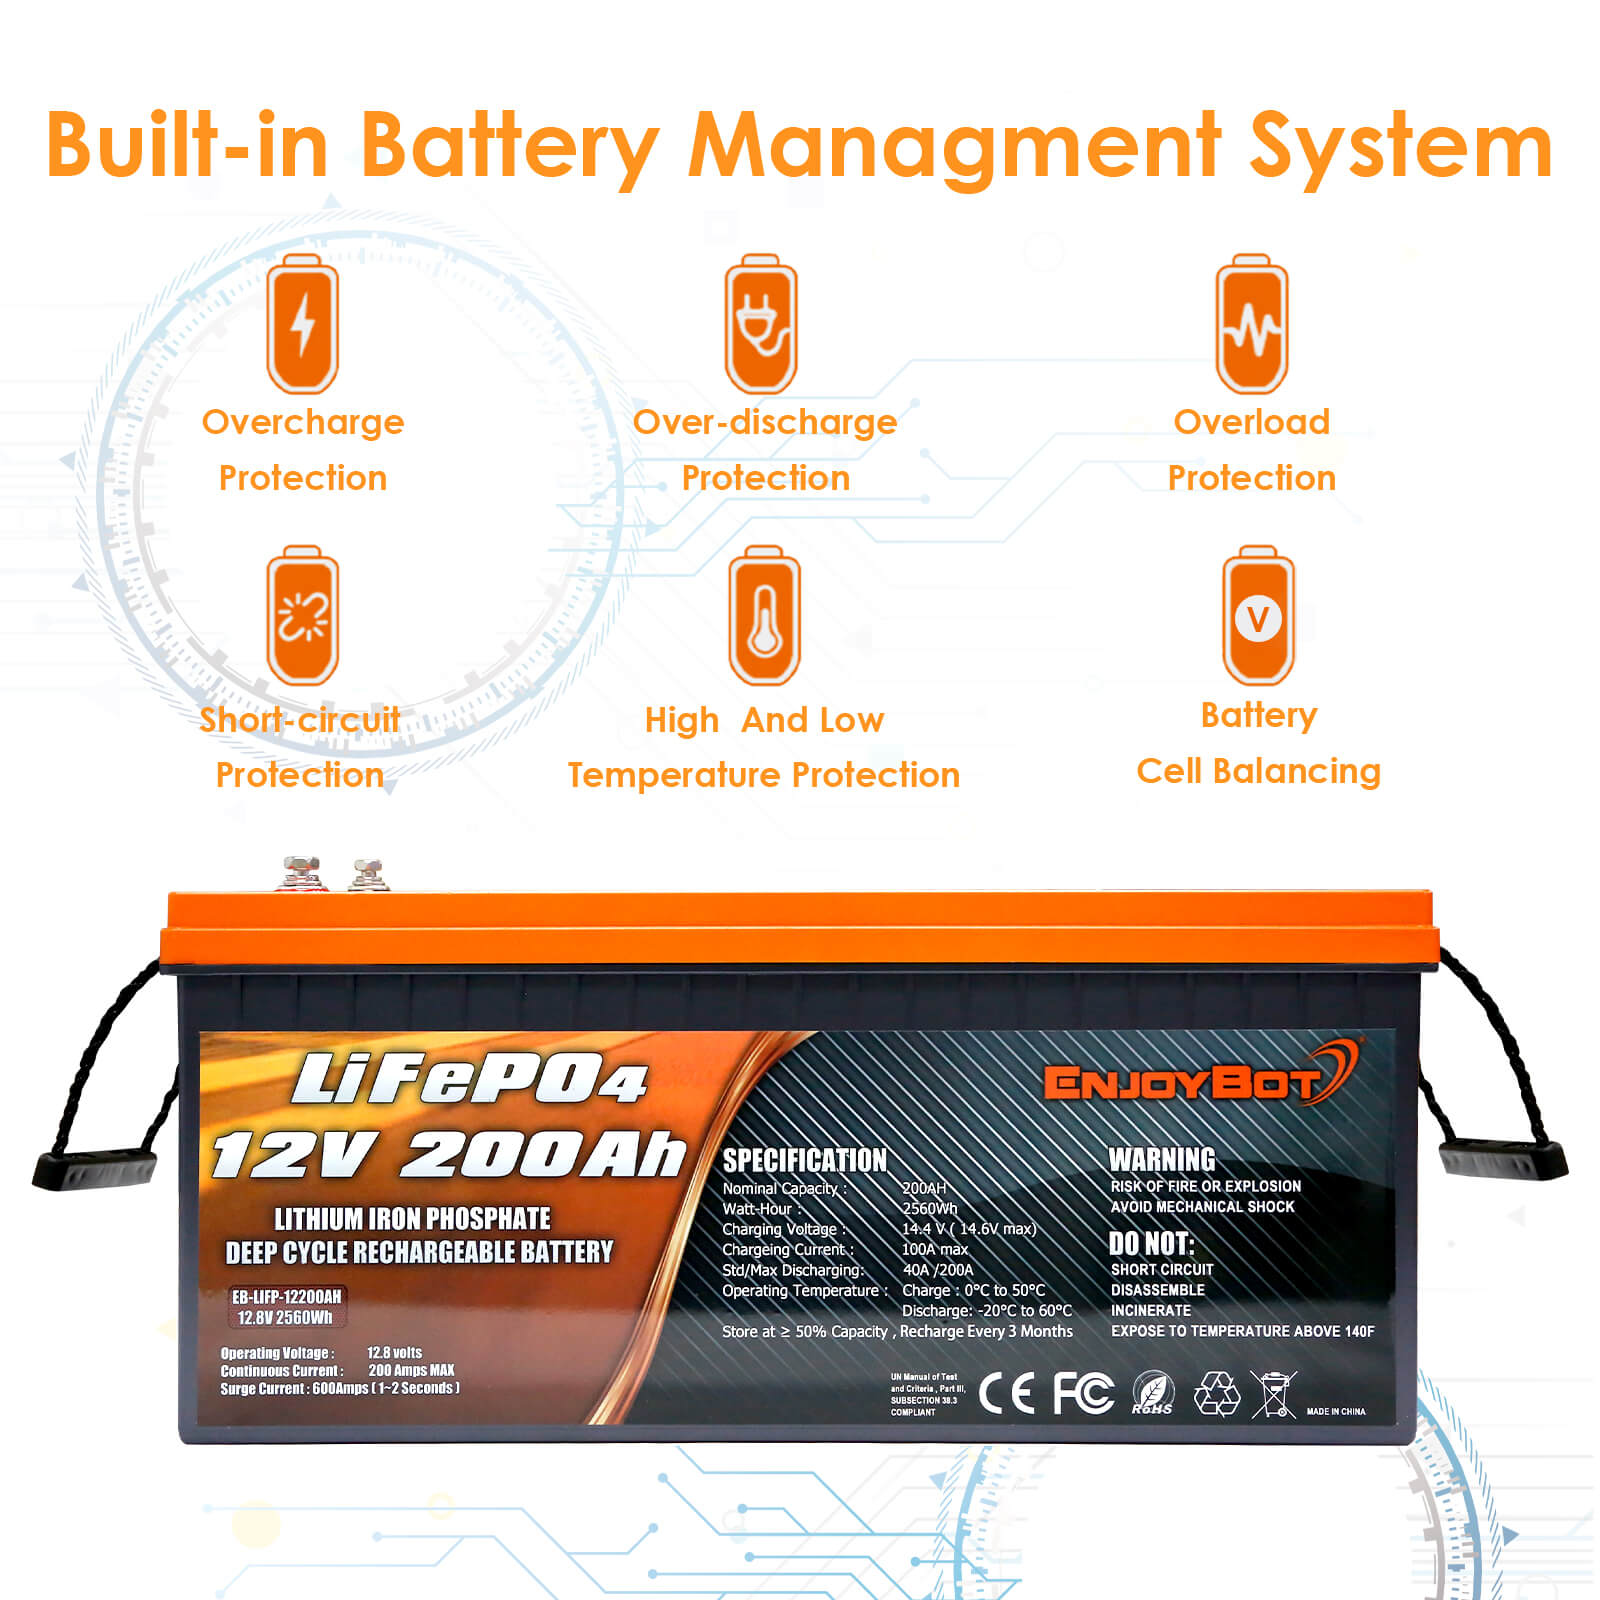 ENJOYBOT 12V 200AH LiFePO4 Deep Cycle 2560 Wh wiederaufladbare Lithium- Batterie - gebaut mit 200A BMS – Enjoybot Official Store